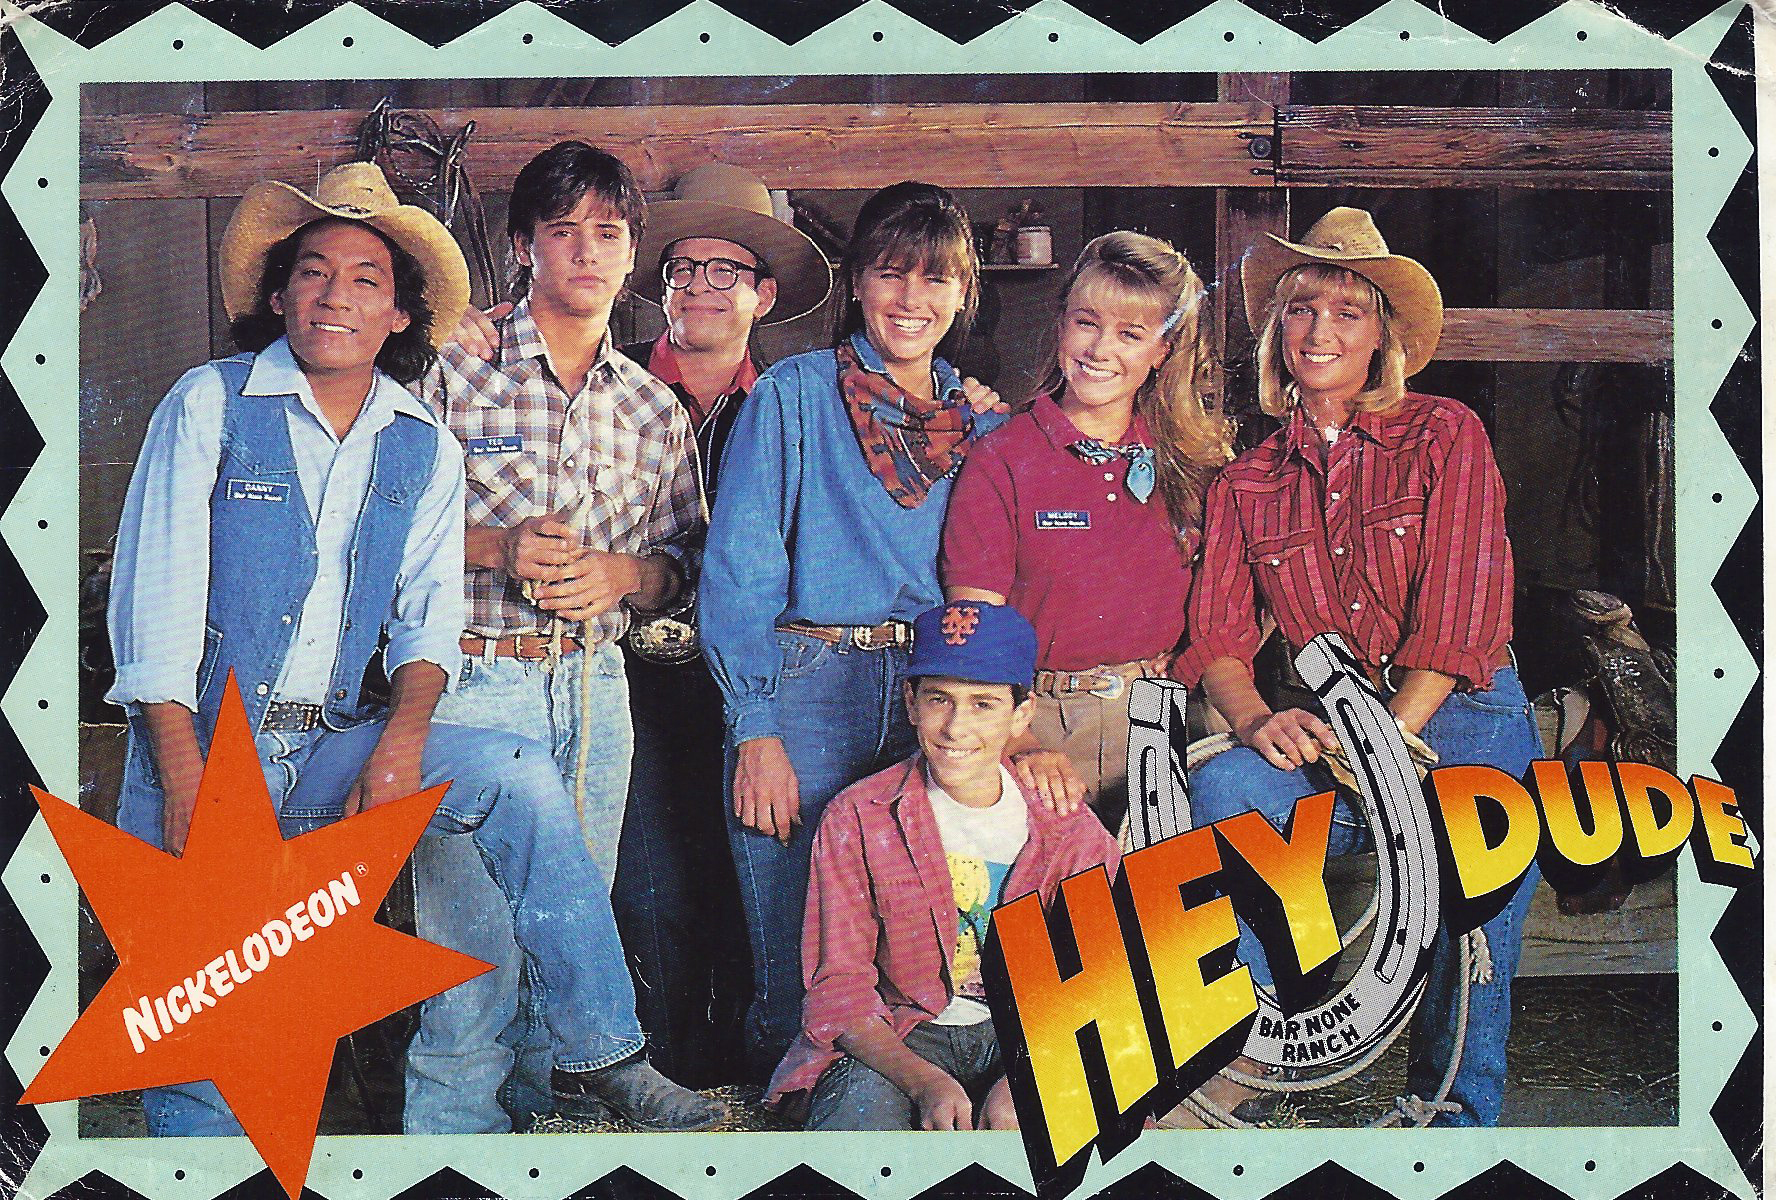 Cast of Nickelodeon's Hey Dude series (Debi Kalman as Lucy--far right)